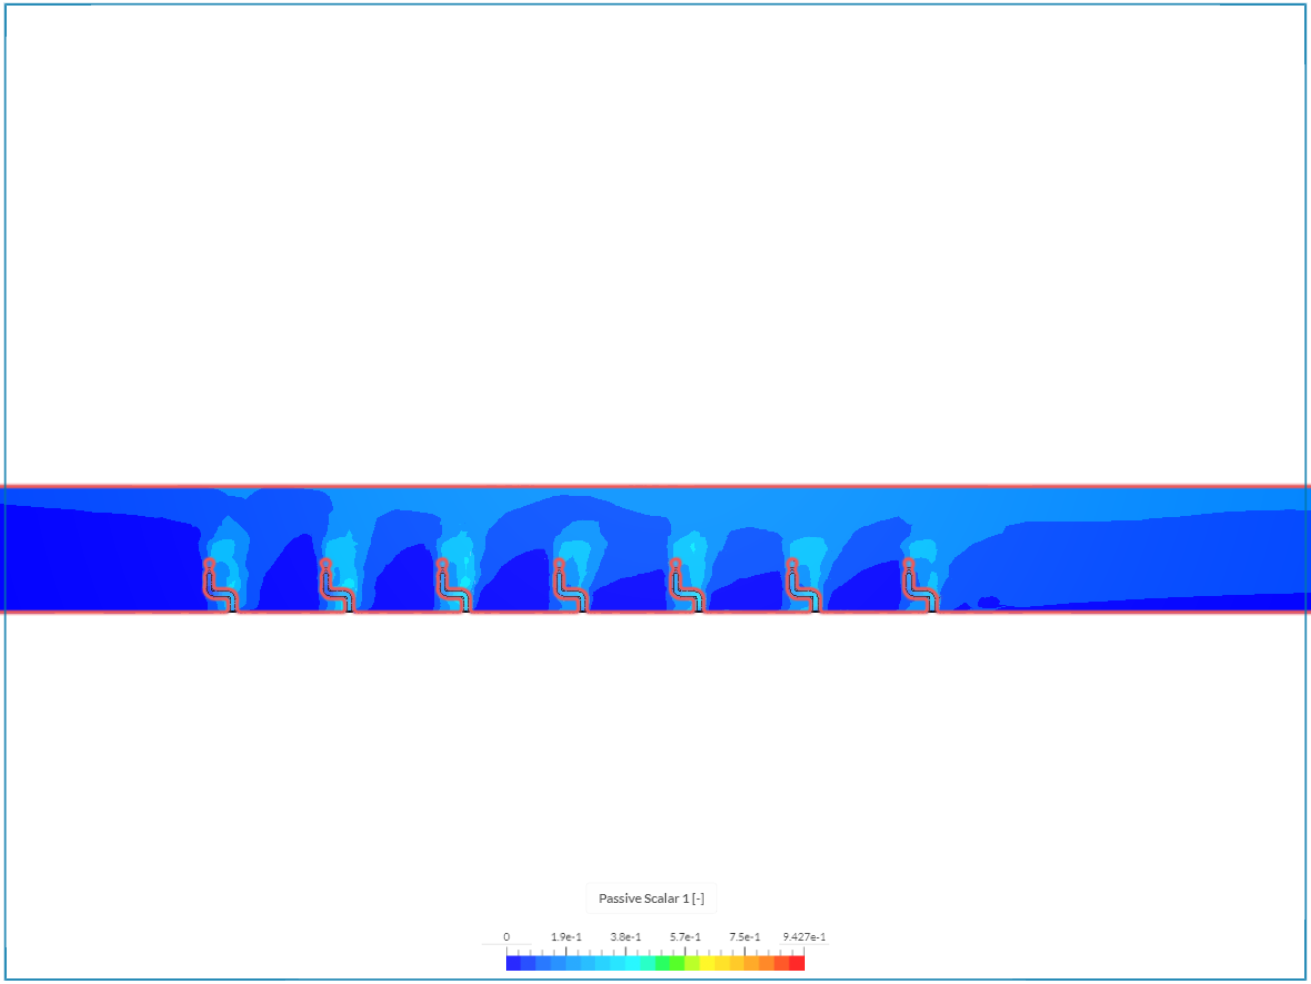 Atrium simulation benchmark image